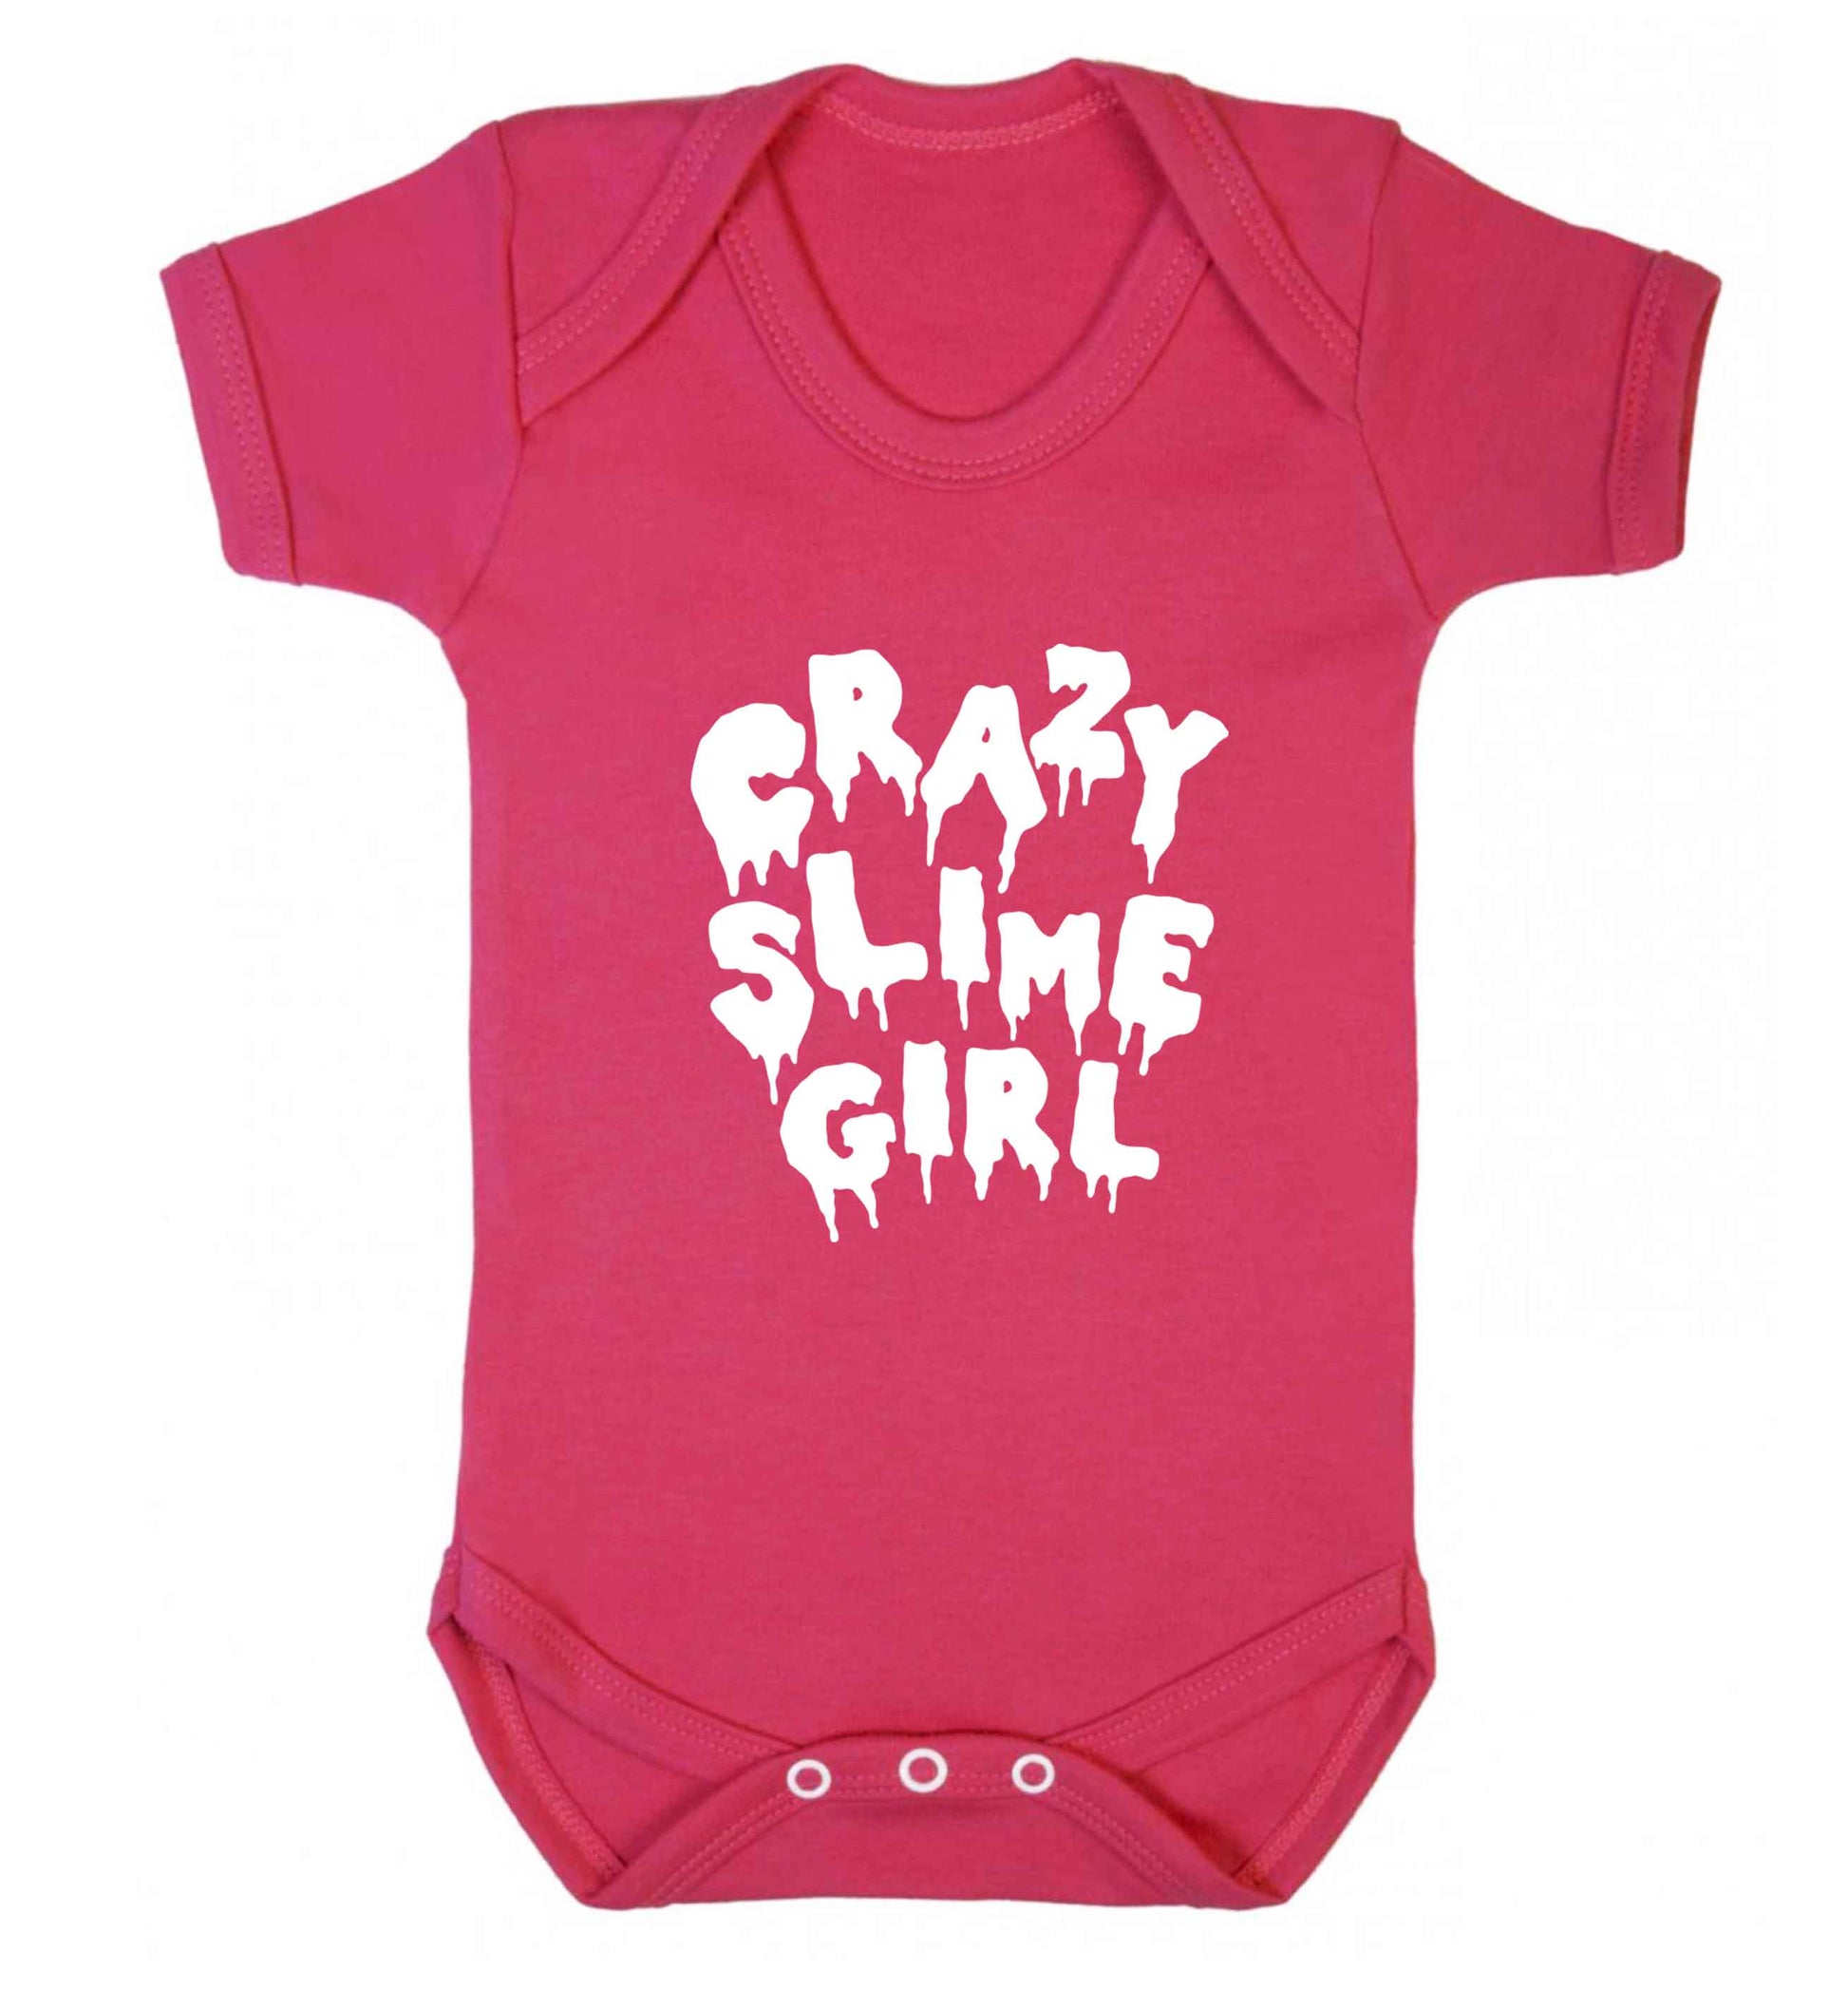 Crazy slime girl baby vest dark pink 18-24 months